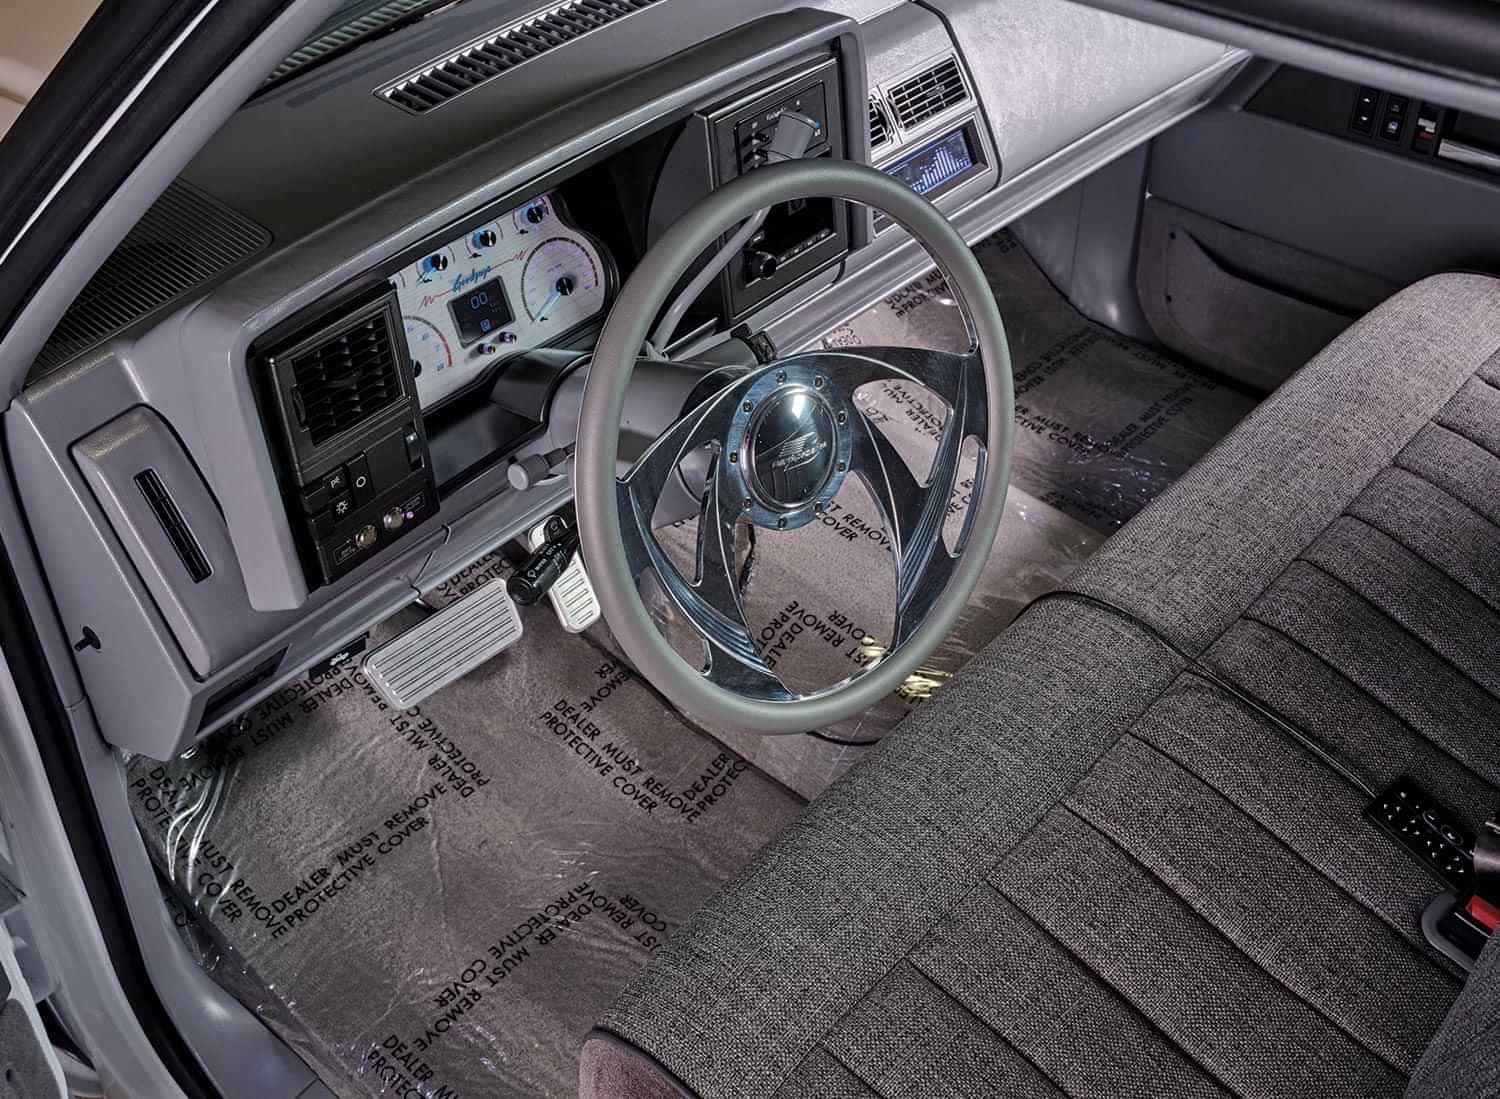 ’88 Chevy steering wheel